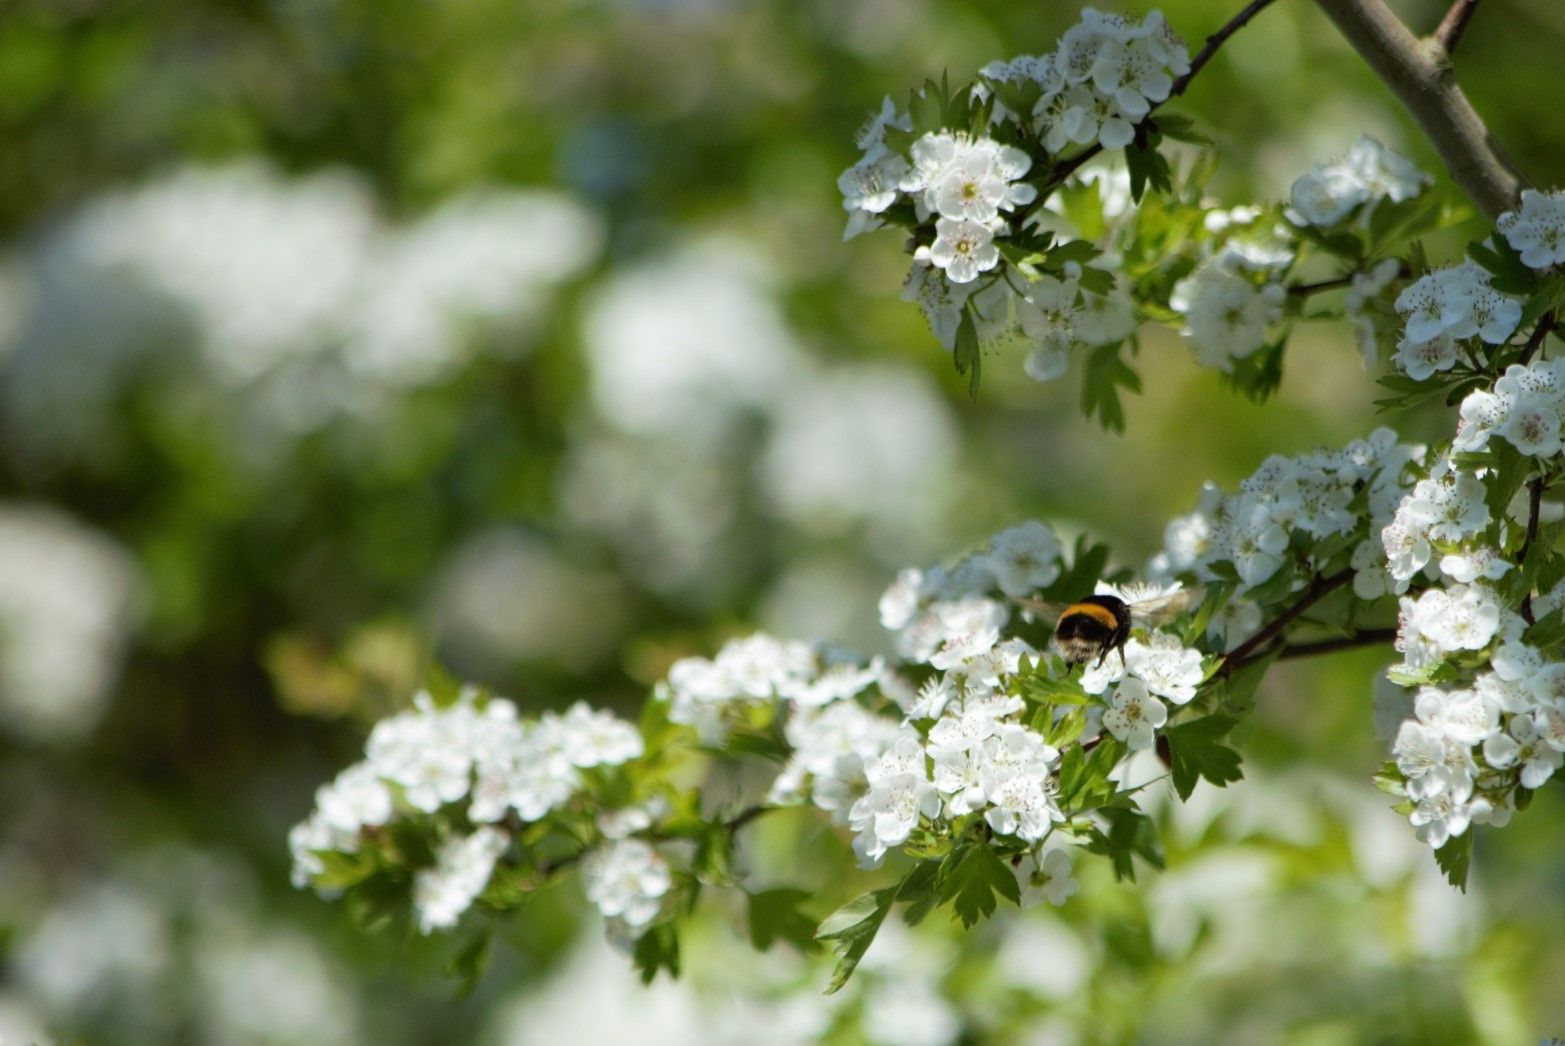 Bumblebee on hawthorn hedge blossom flowers. Credit Megan Gimber. Resized